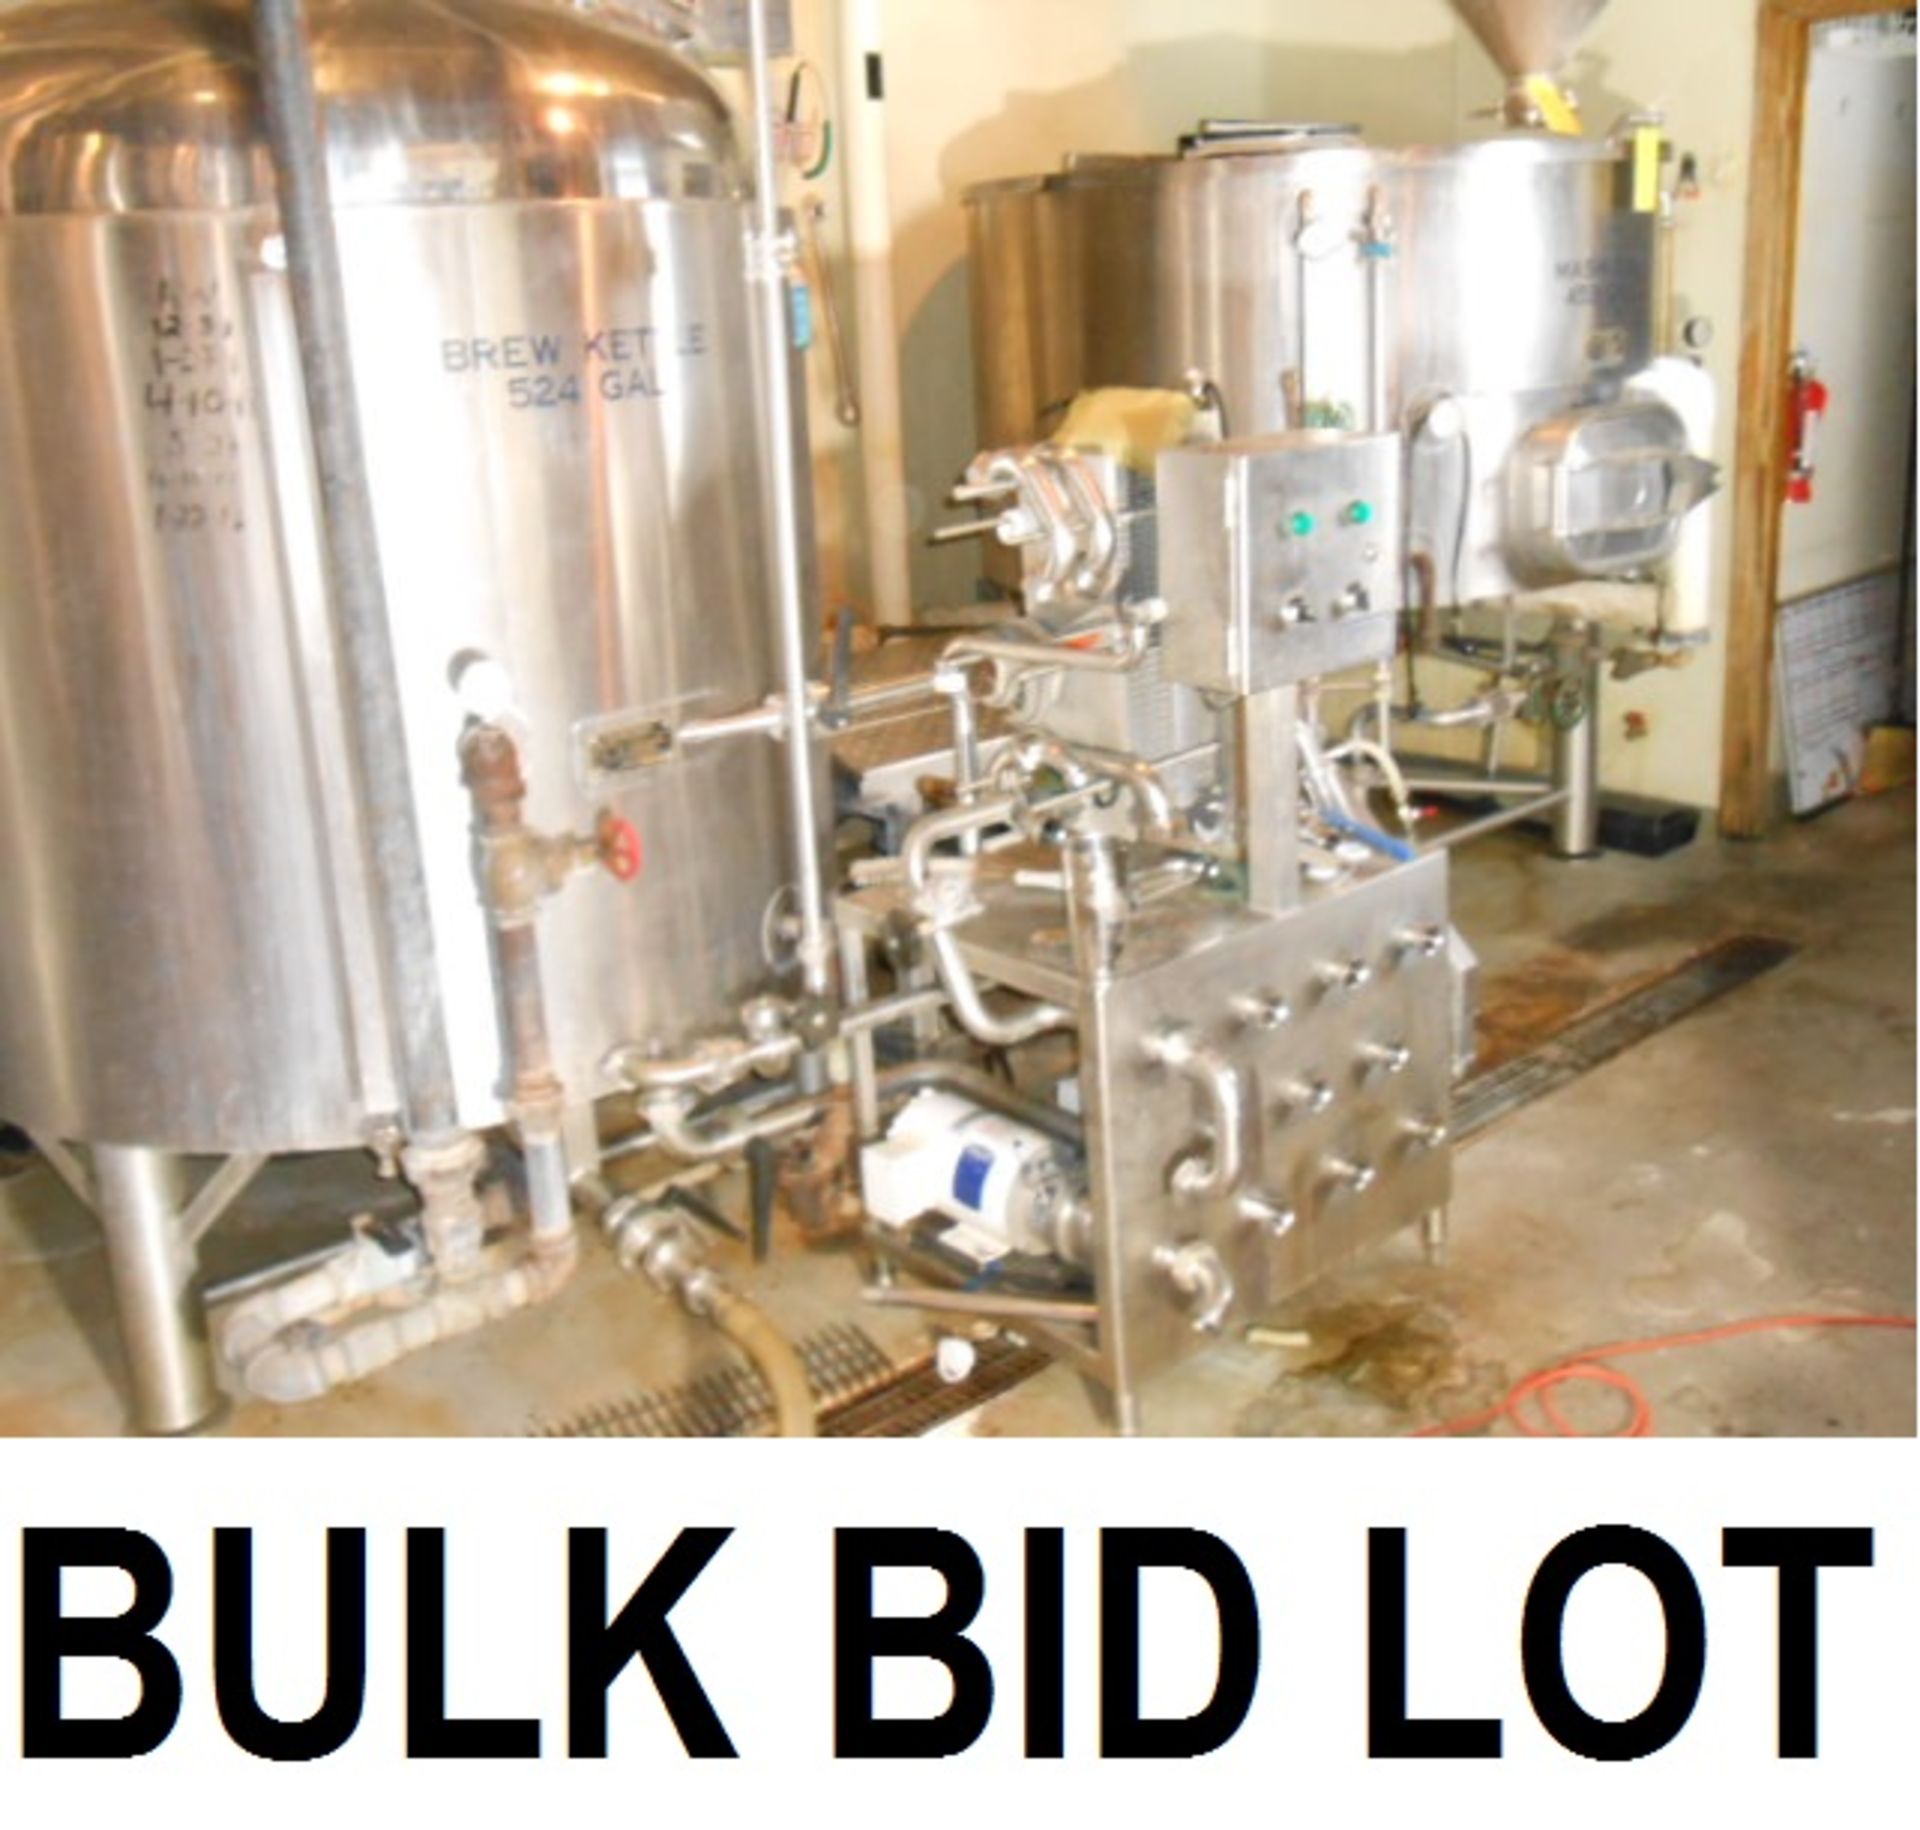 ***Bulk Sale Offering Lot -- Brew House ***Consists of Lots 101, 102, 103, 104, 106. Winning bid